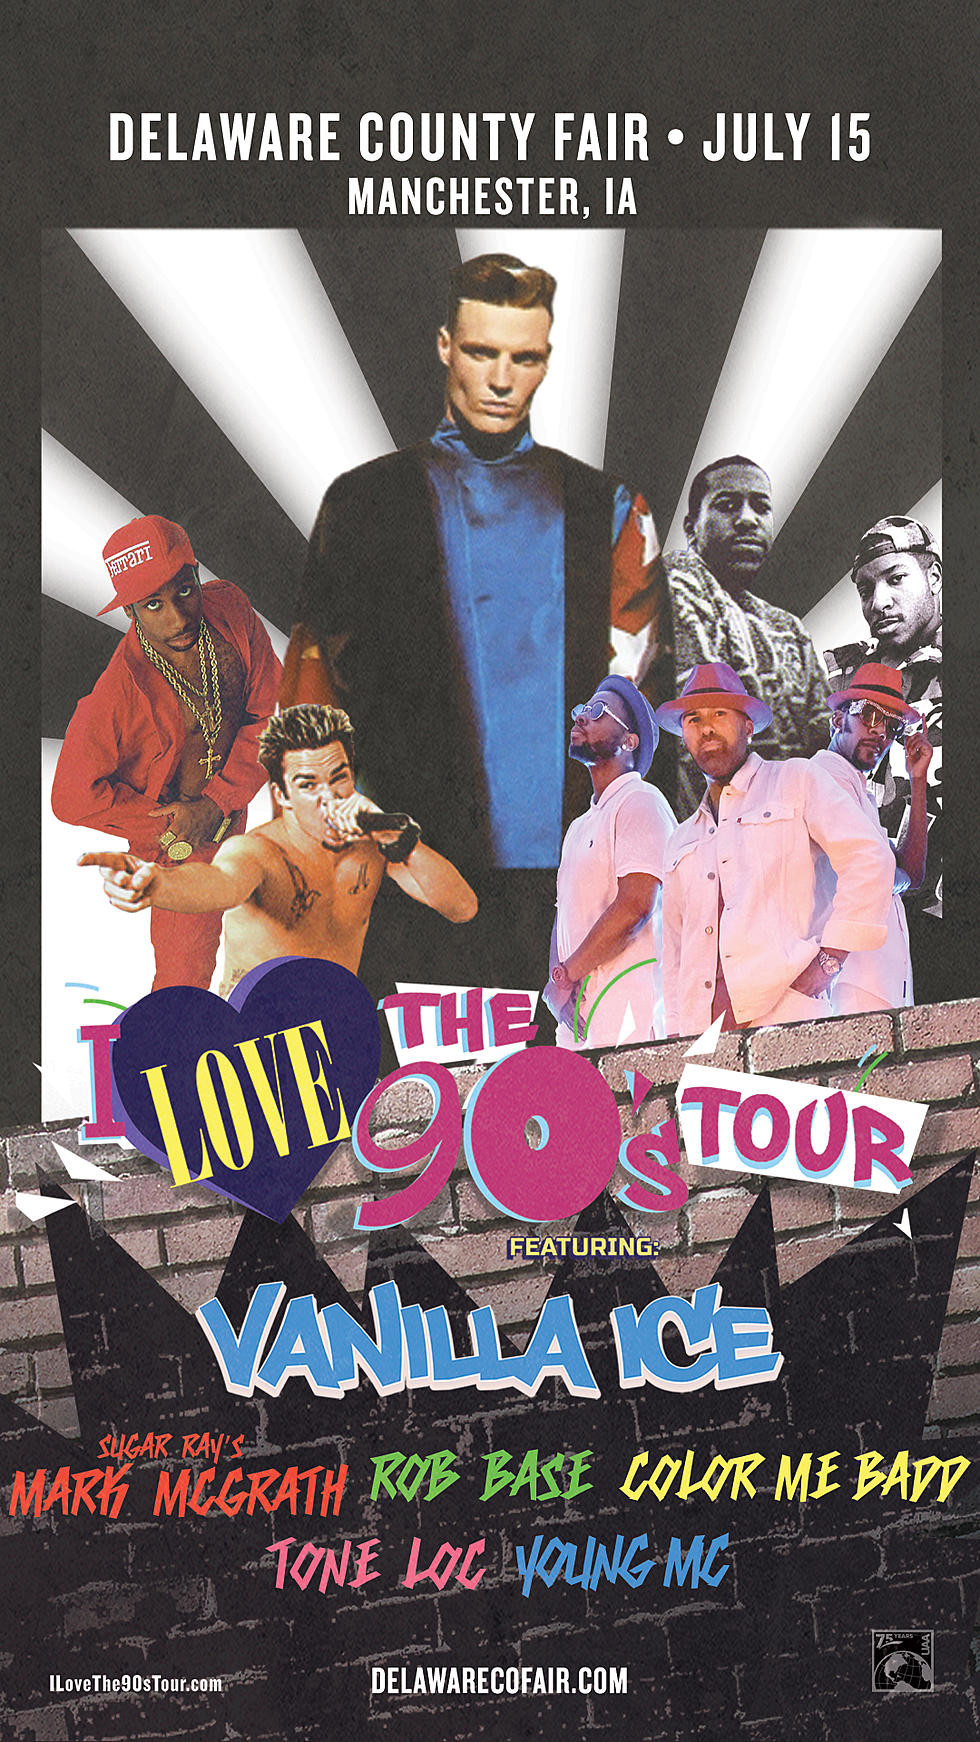 I Love the 90s featuring Vanilla Ice, Mark McGrath of Sugar Ray